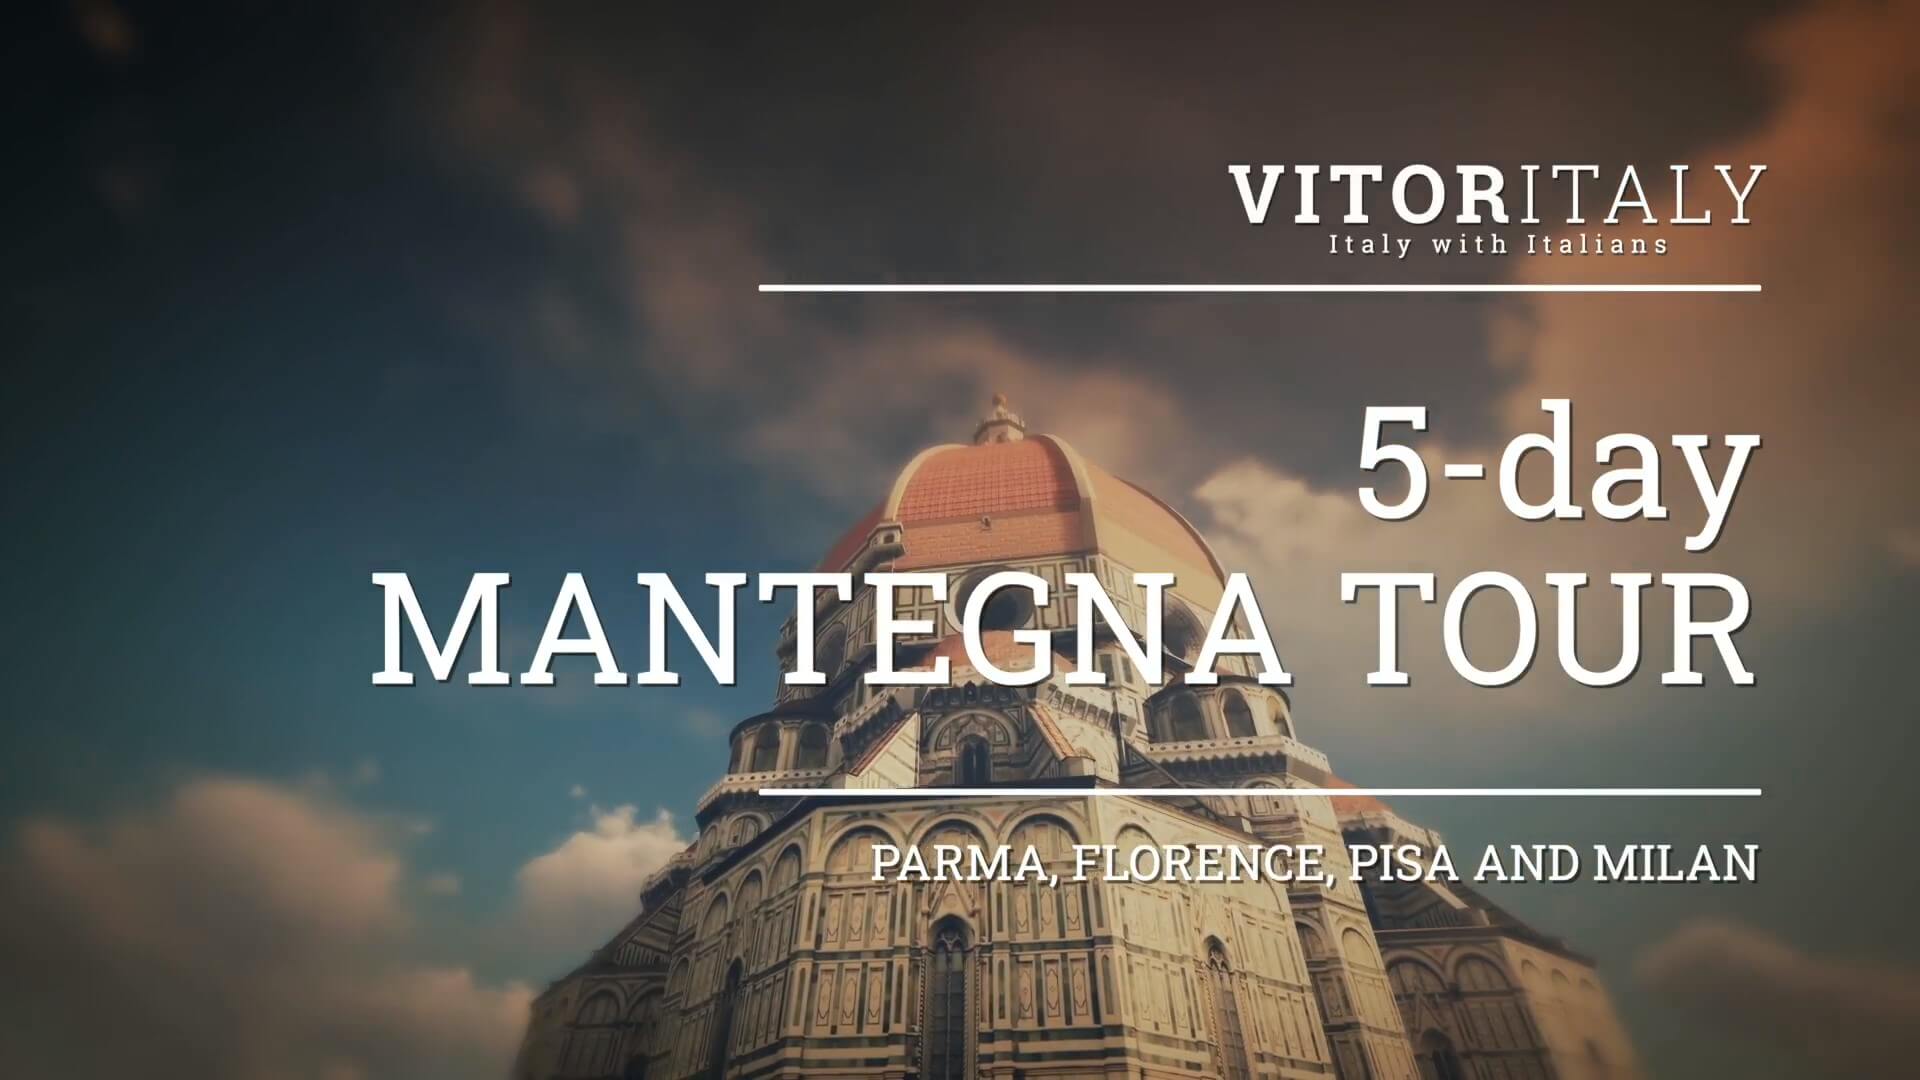 MANTEGNA TOUR - Parma, Florence, Pisa and Milan in 5 days